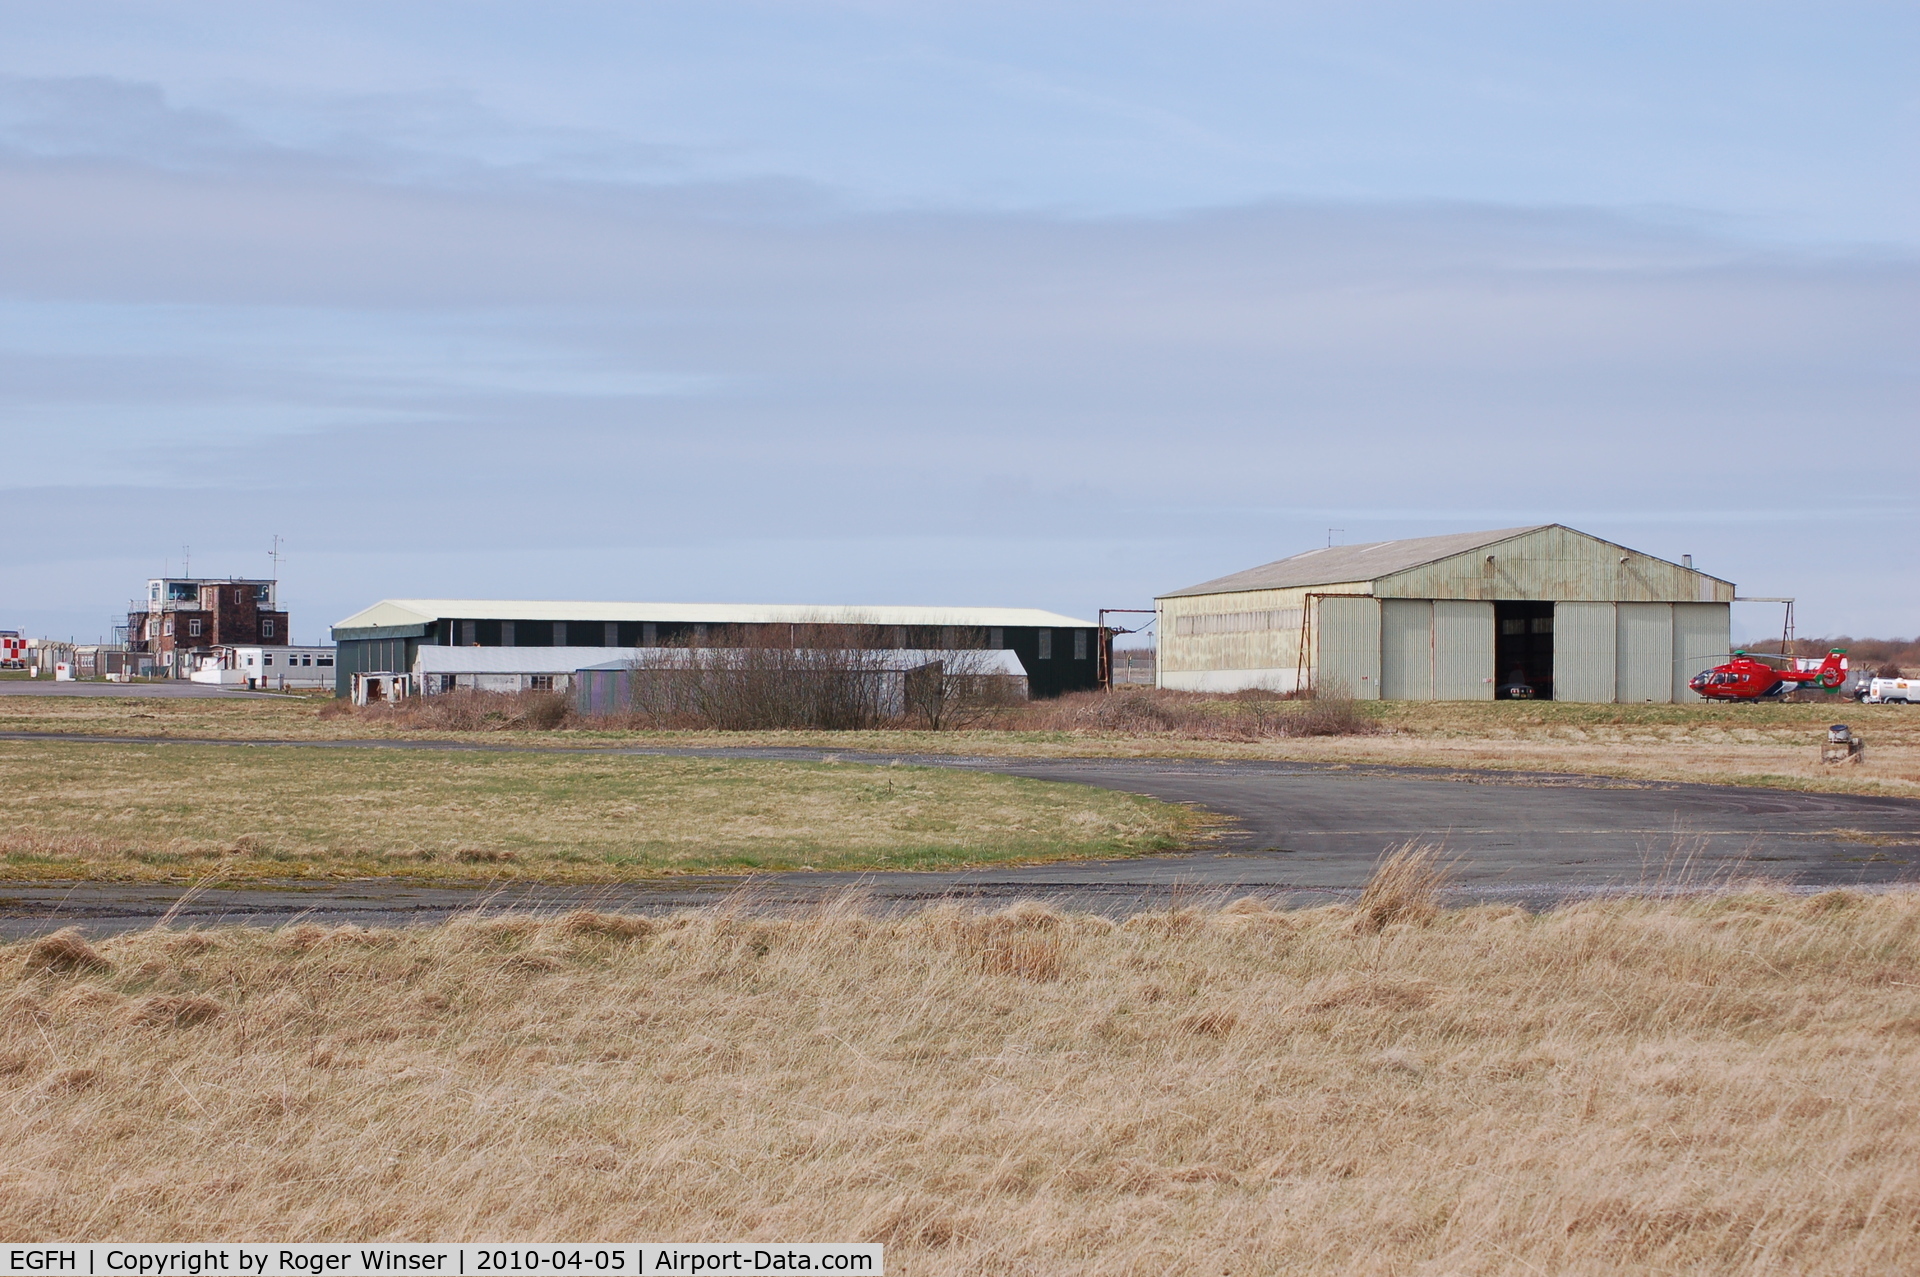 Swansea Airport, Swansea, Wales United Kingdom (EGFH) - View of the airport's Bellman (Hangar 2) and B1 (Hangar 1) type hangars 